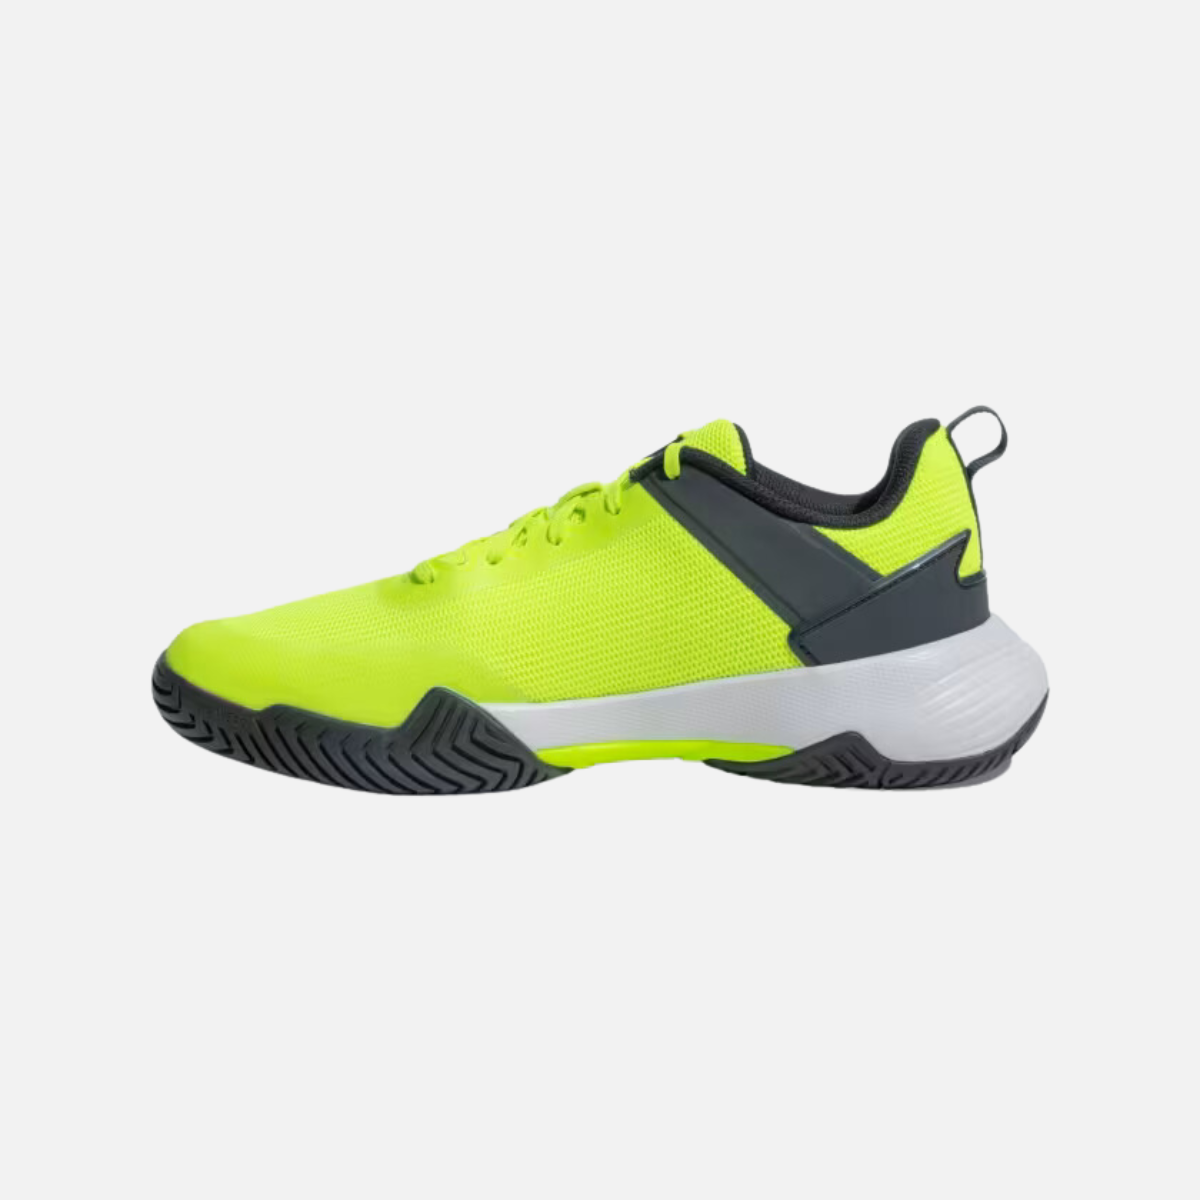 Adidas Tennis Top Men's Tennis shoes -Lucid Lemon/Grey Six